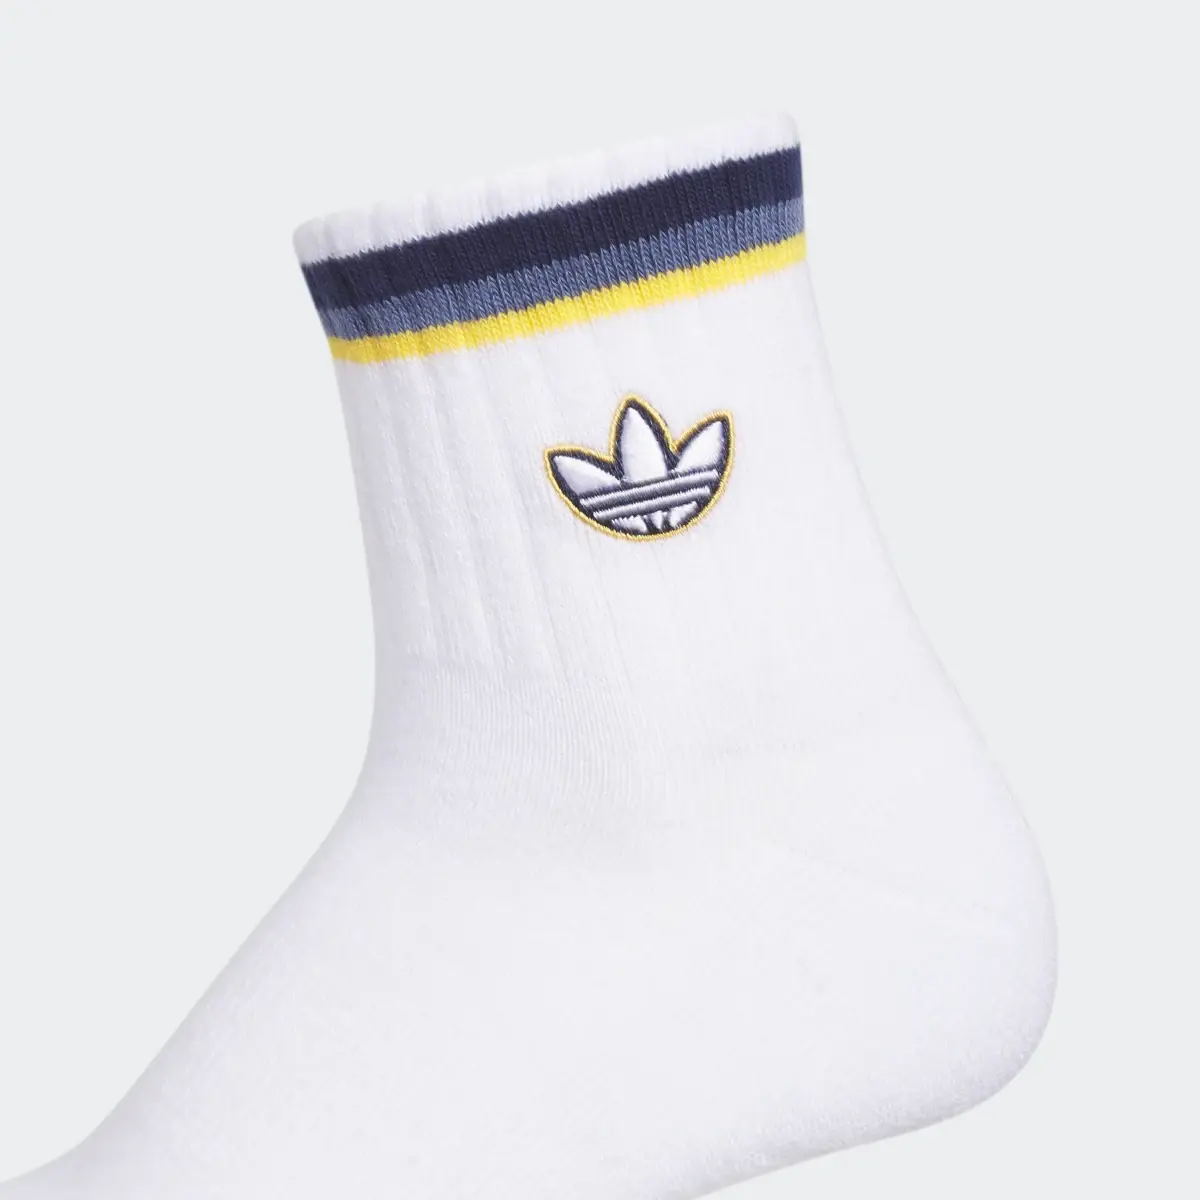 Adidas Ori Aura Socks 3 Pairs. 3